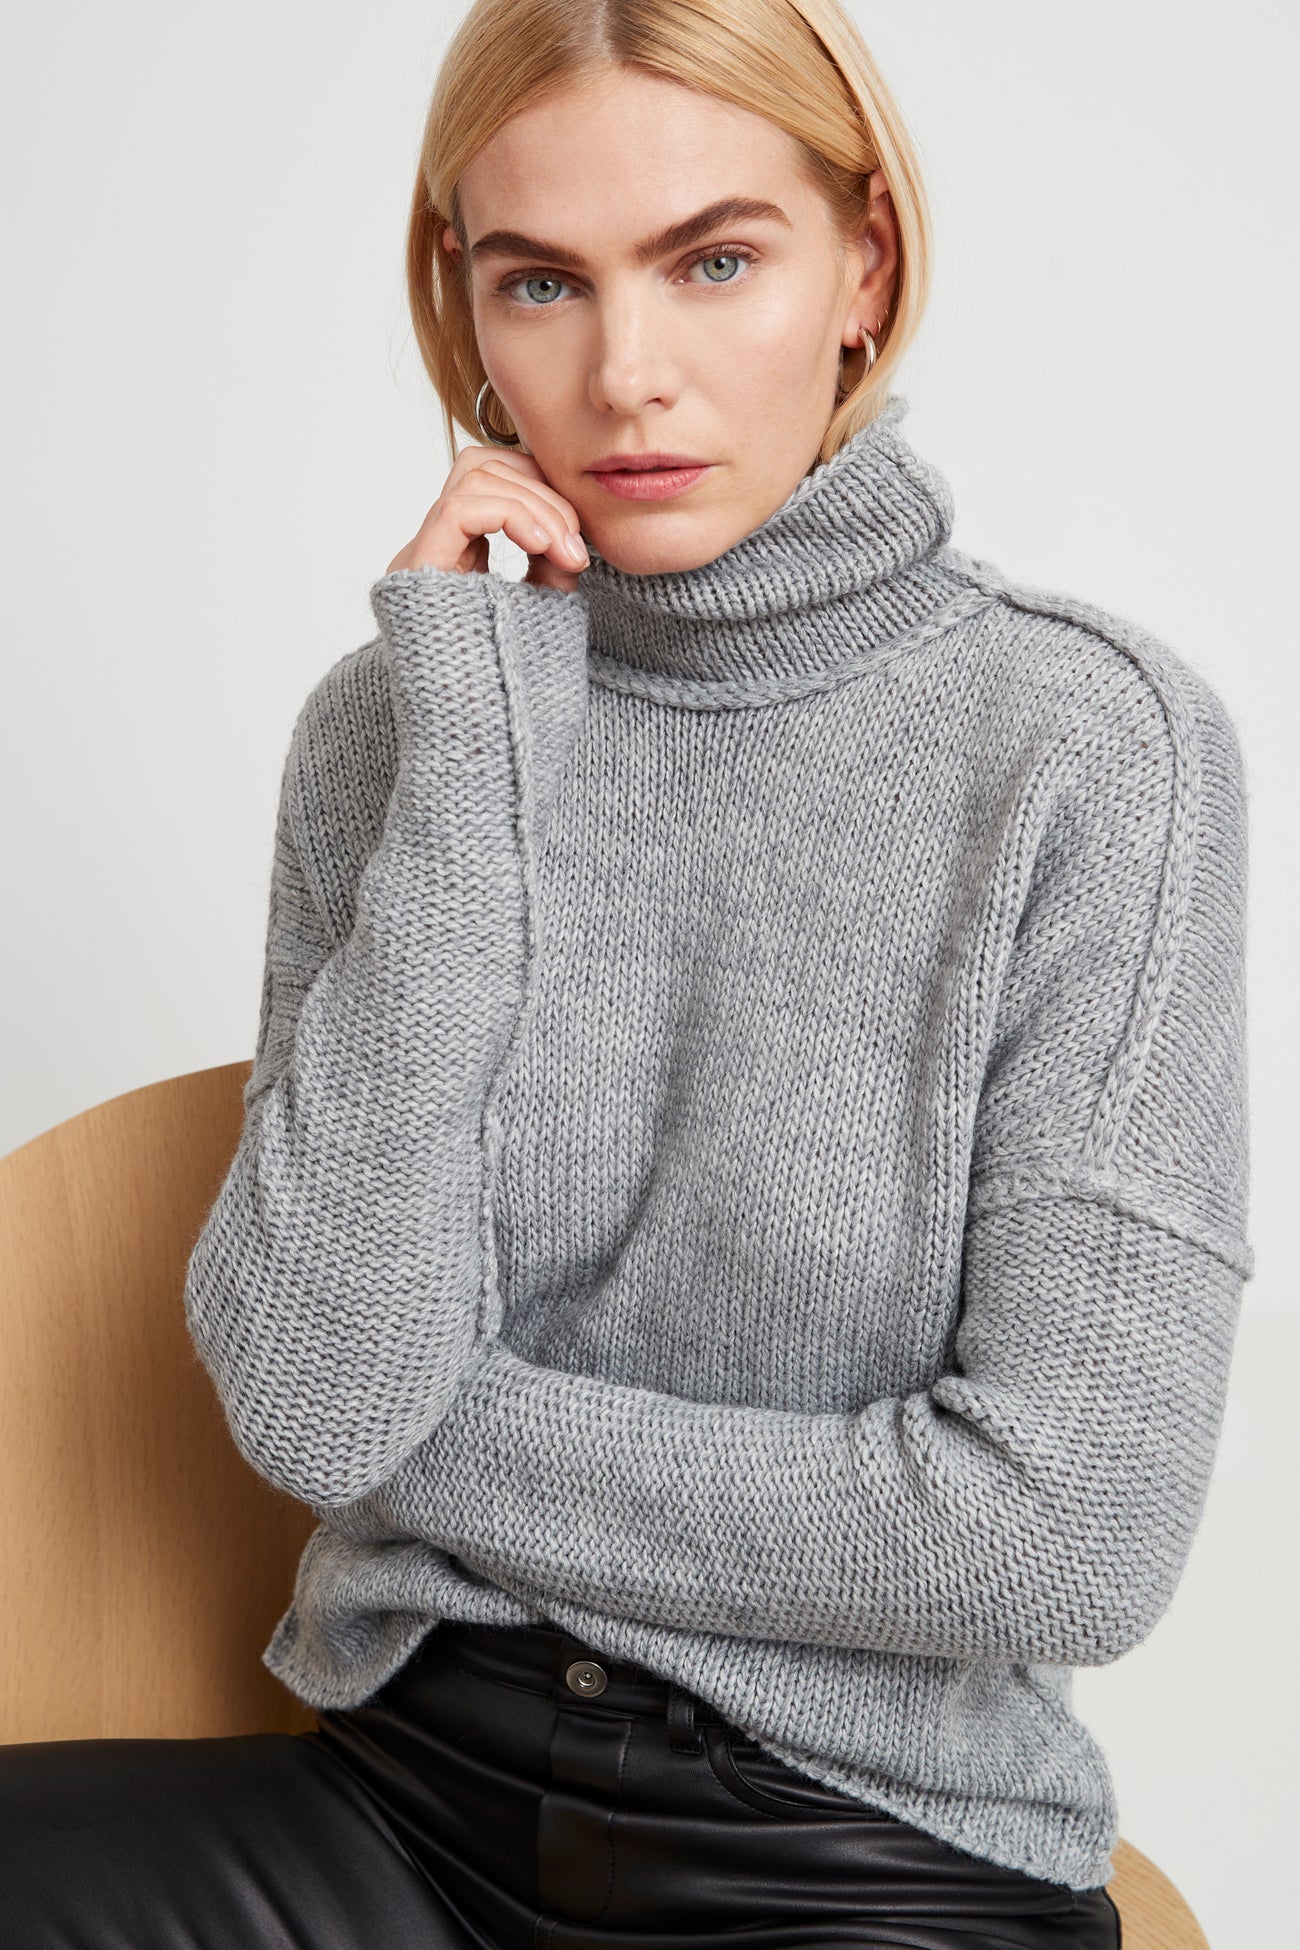 Marcella NYC Market Turtleneck Sweater – Mod and Retro Clothing